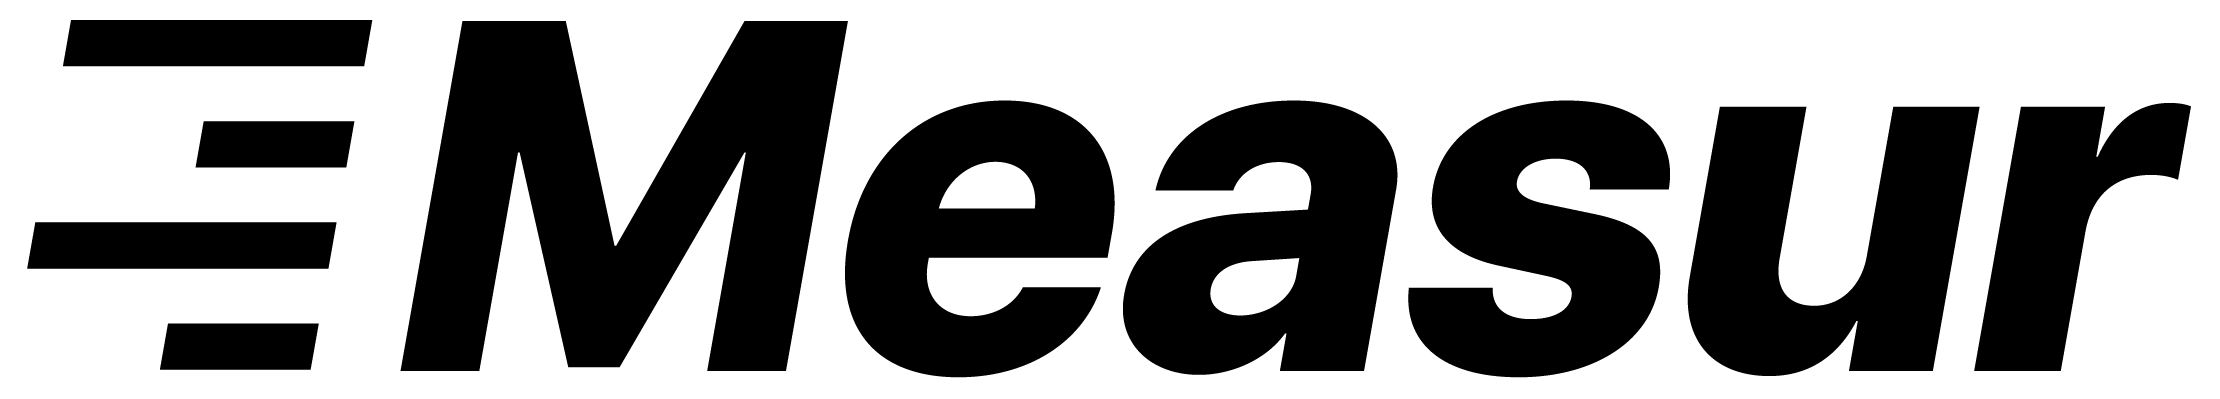 measur-logo